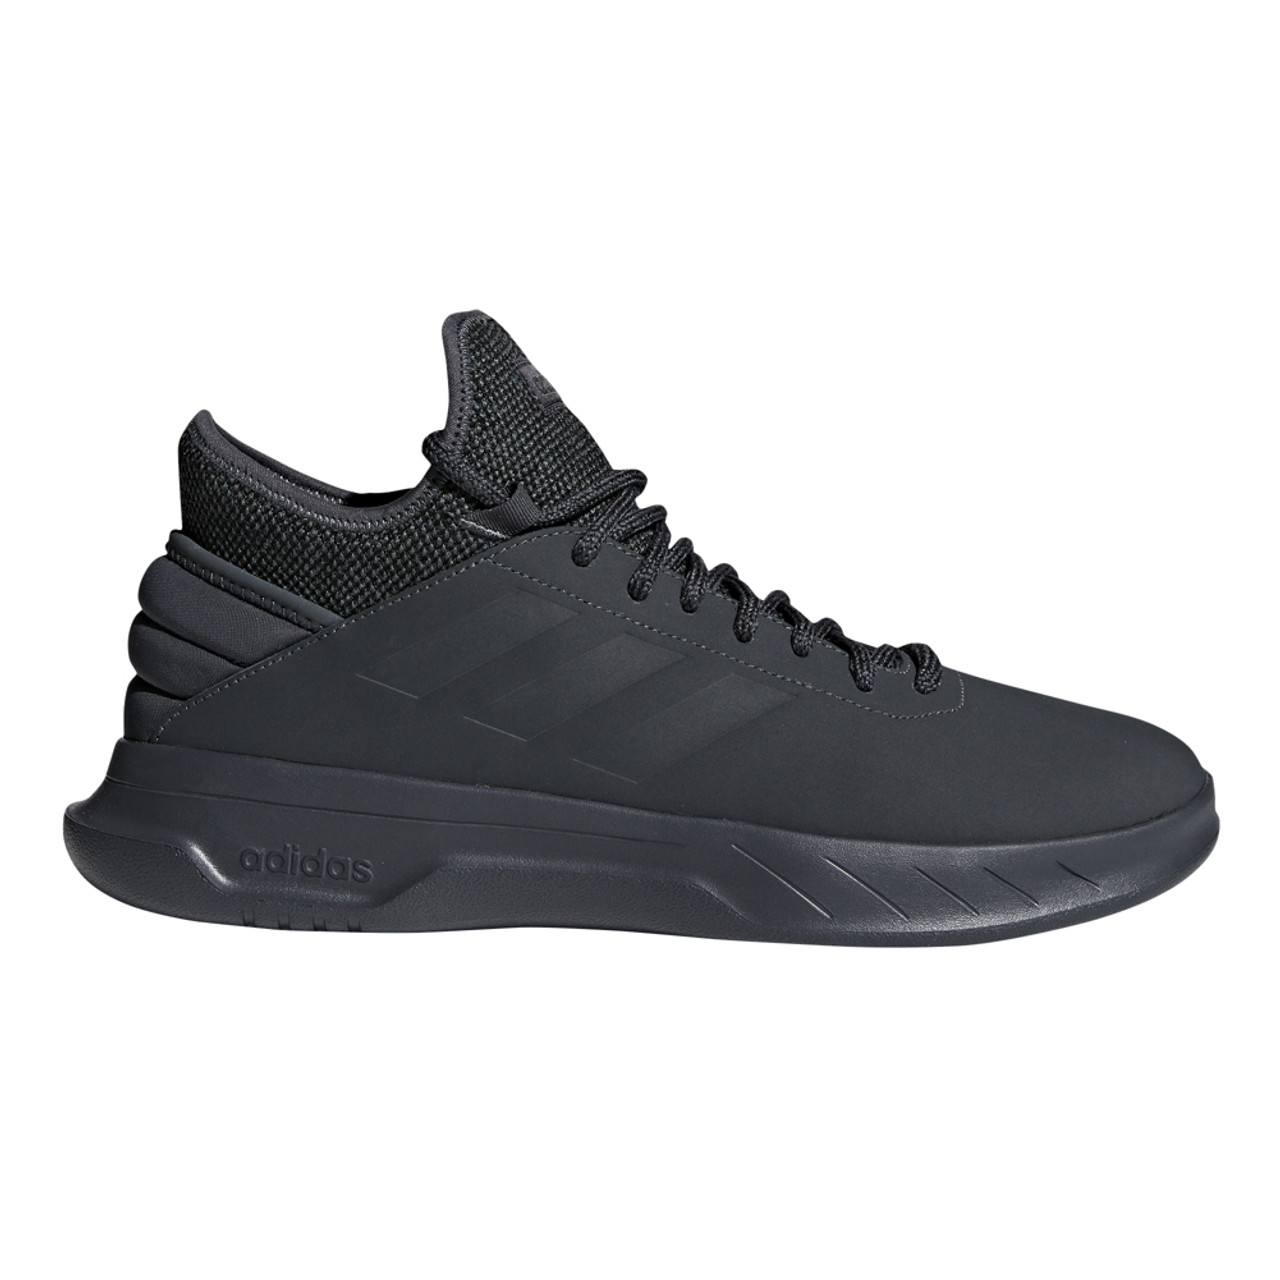 adidas fusion storm men's basketball shoes